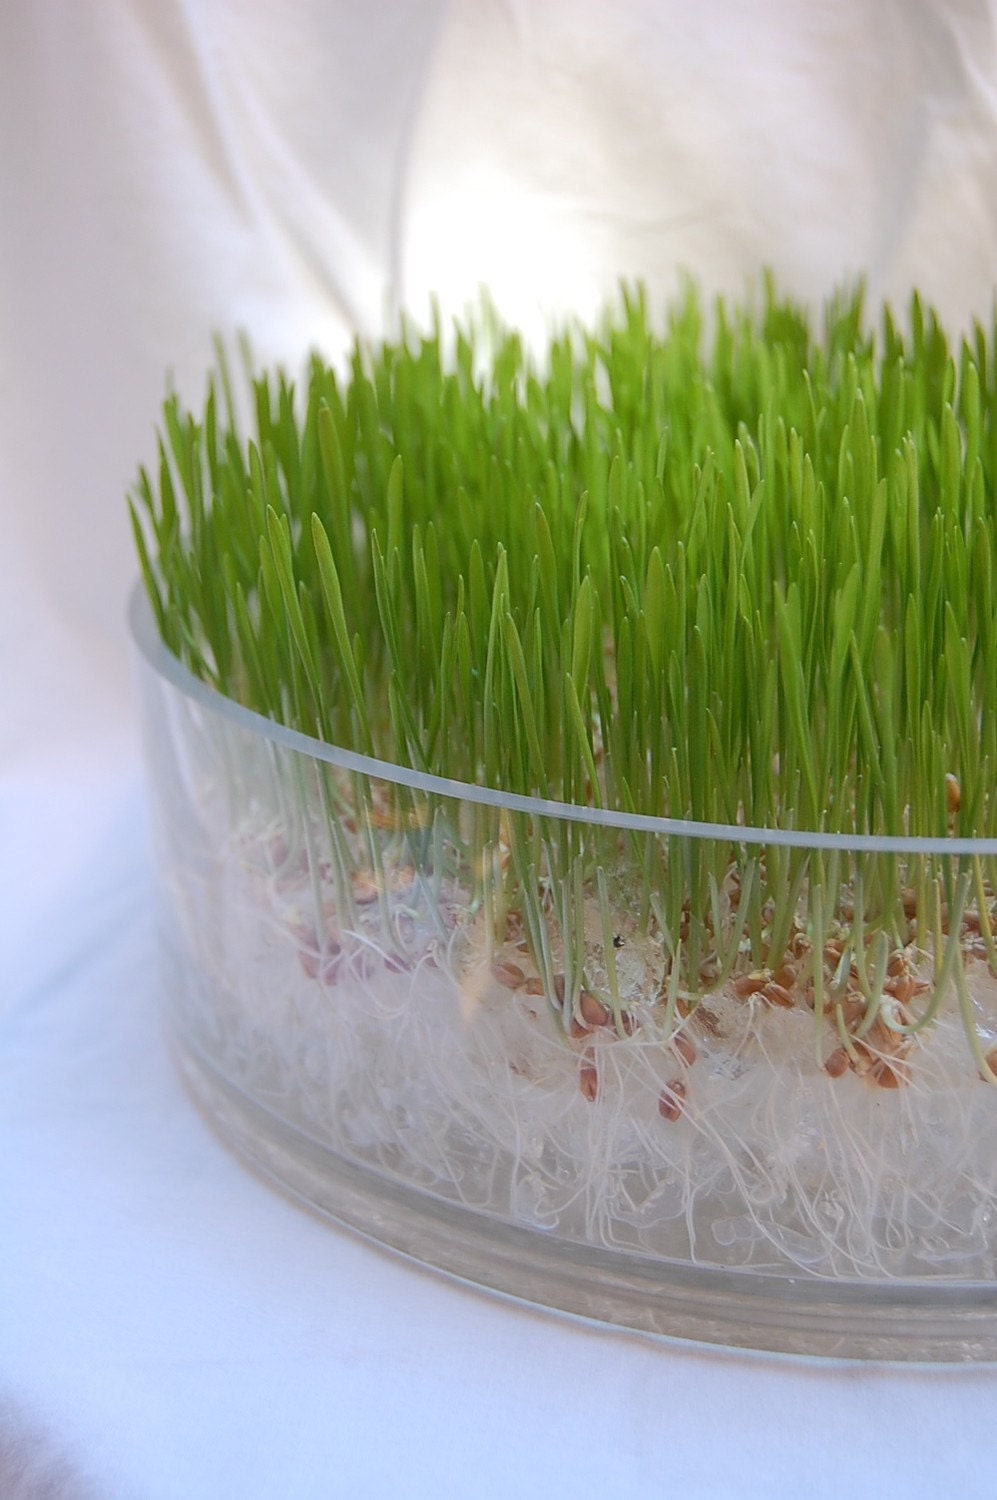 Chic Wheatgrass Soil-less Grow Kit In Glass Bowl